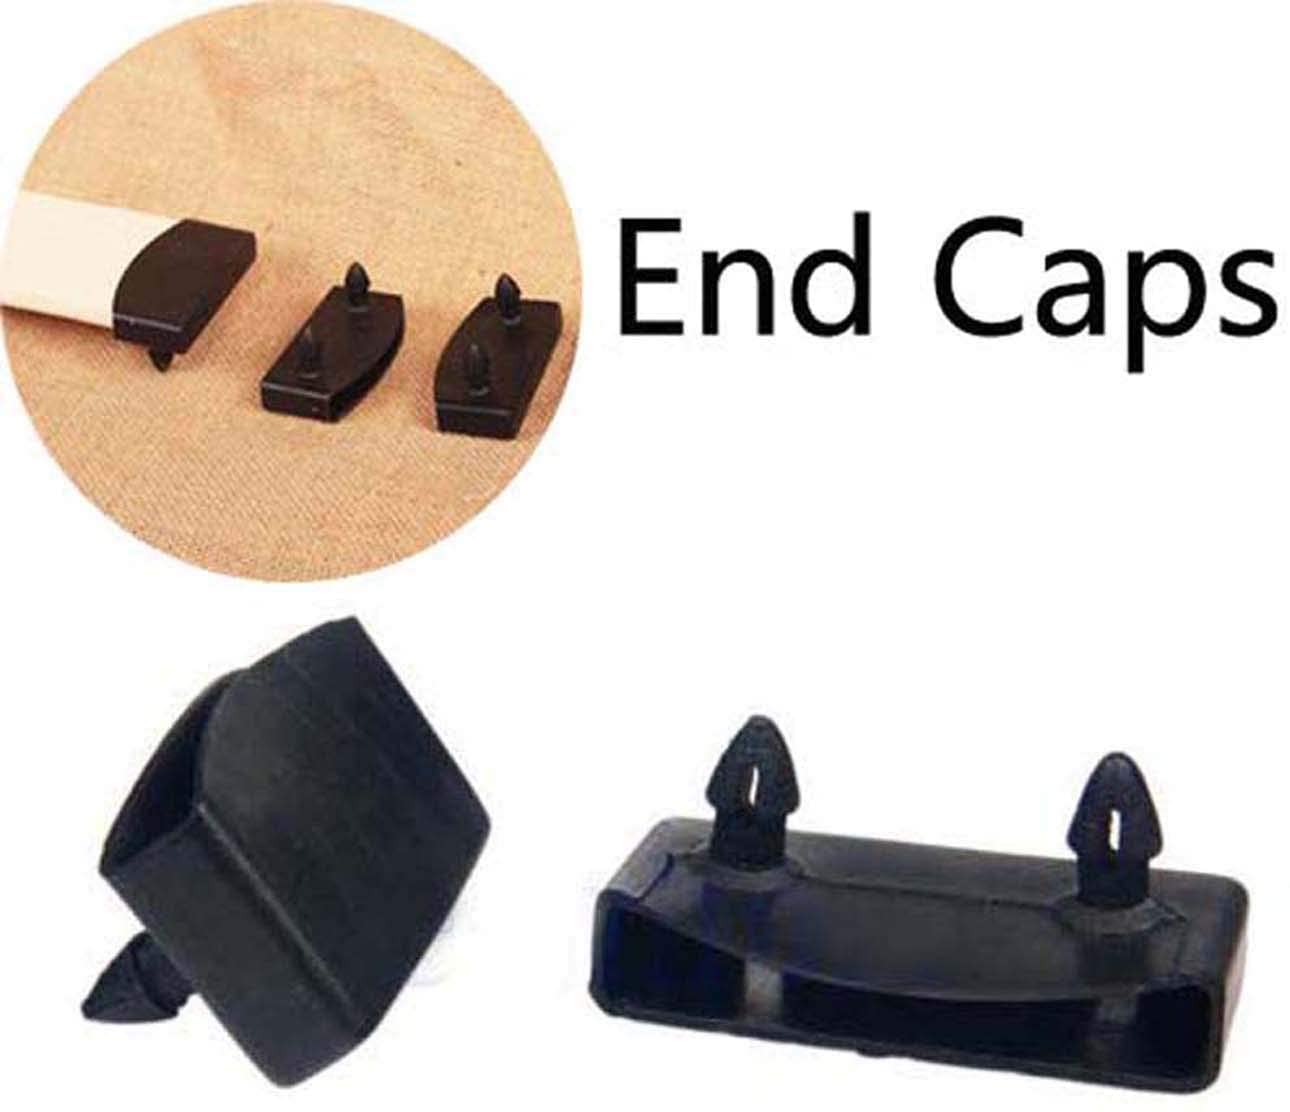 XIAONAN 20Pcs 53mm x 9mm Plastic Bed Slat Cover Replacement Holders End Caps+Centre Caps for Holding Securing Wooden Slats Bed Base,10pcs End Caps + 10pcs Centre Caps